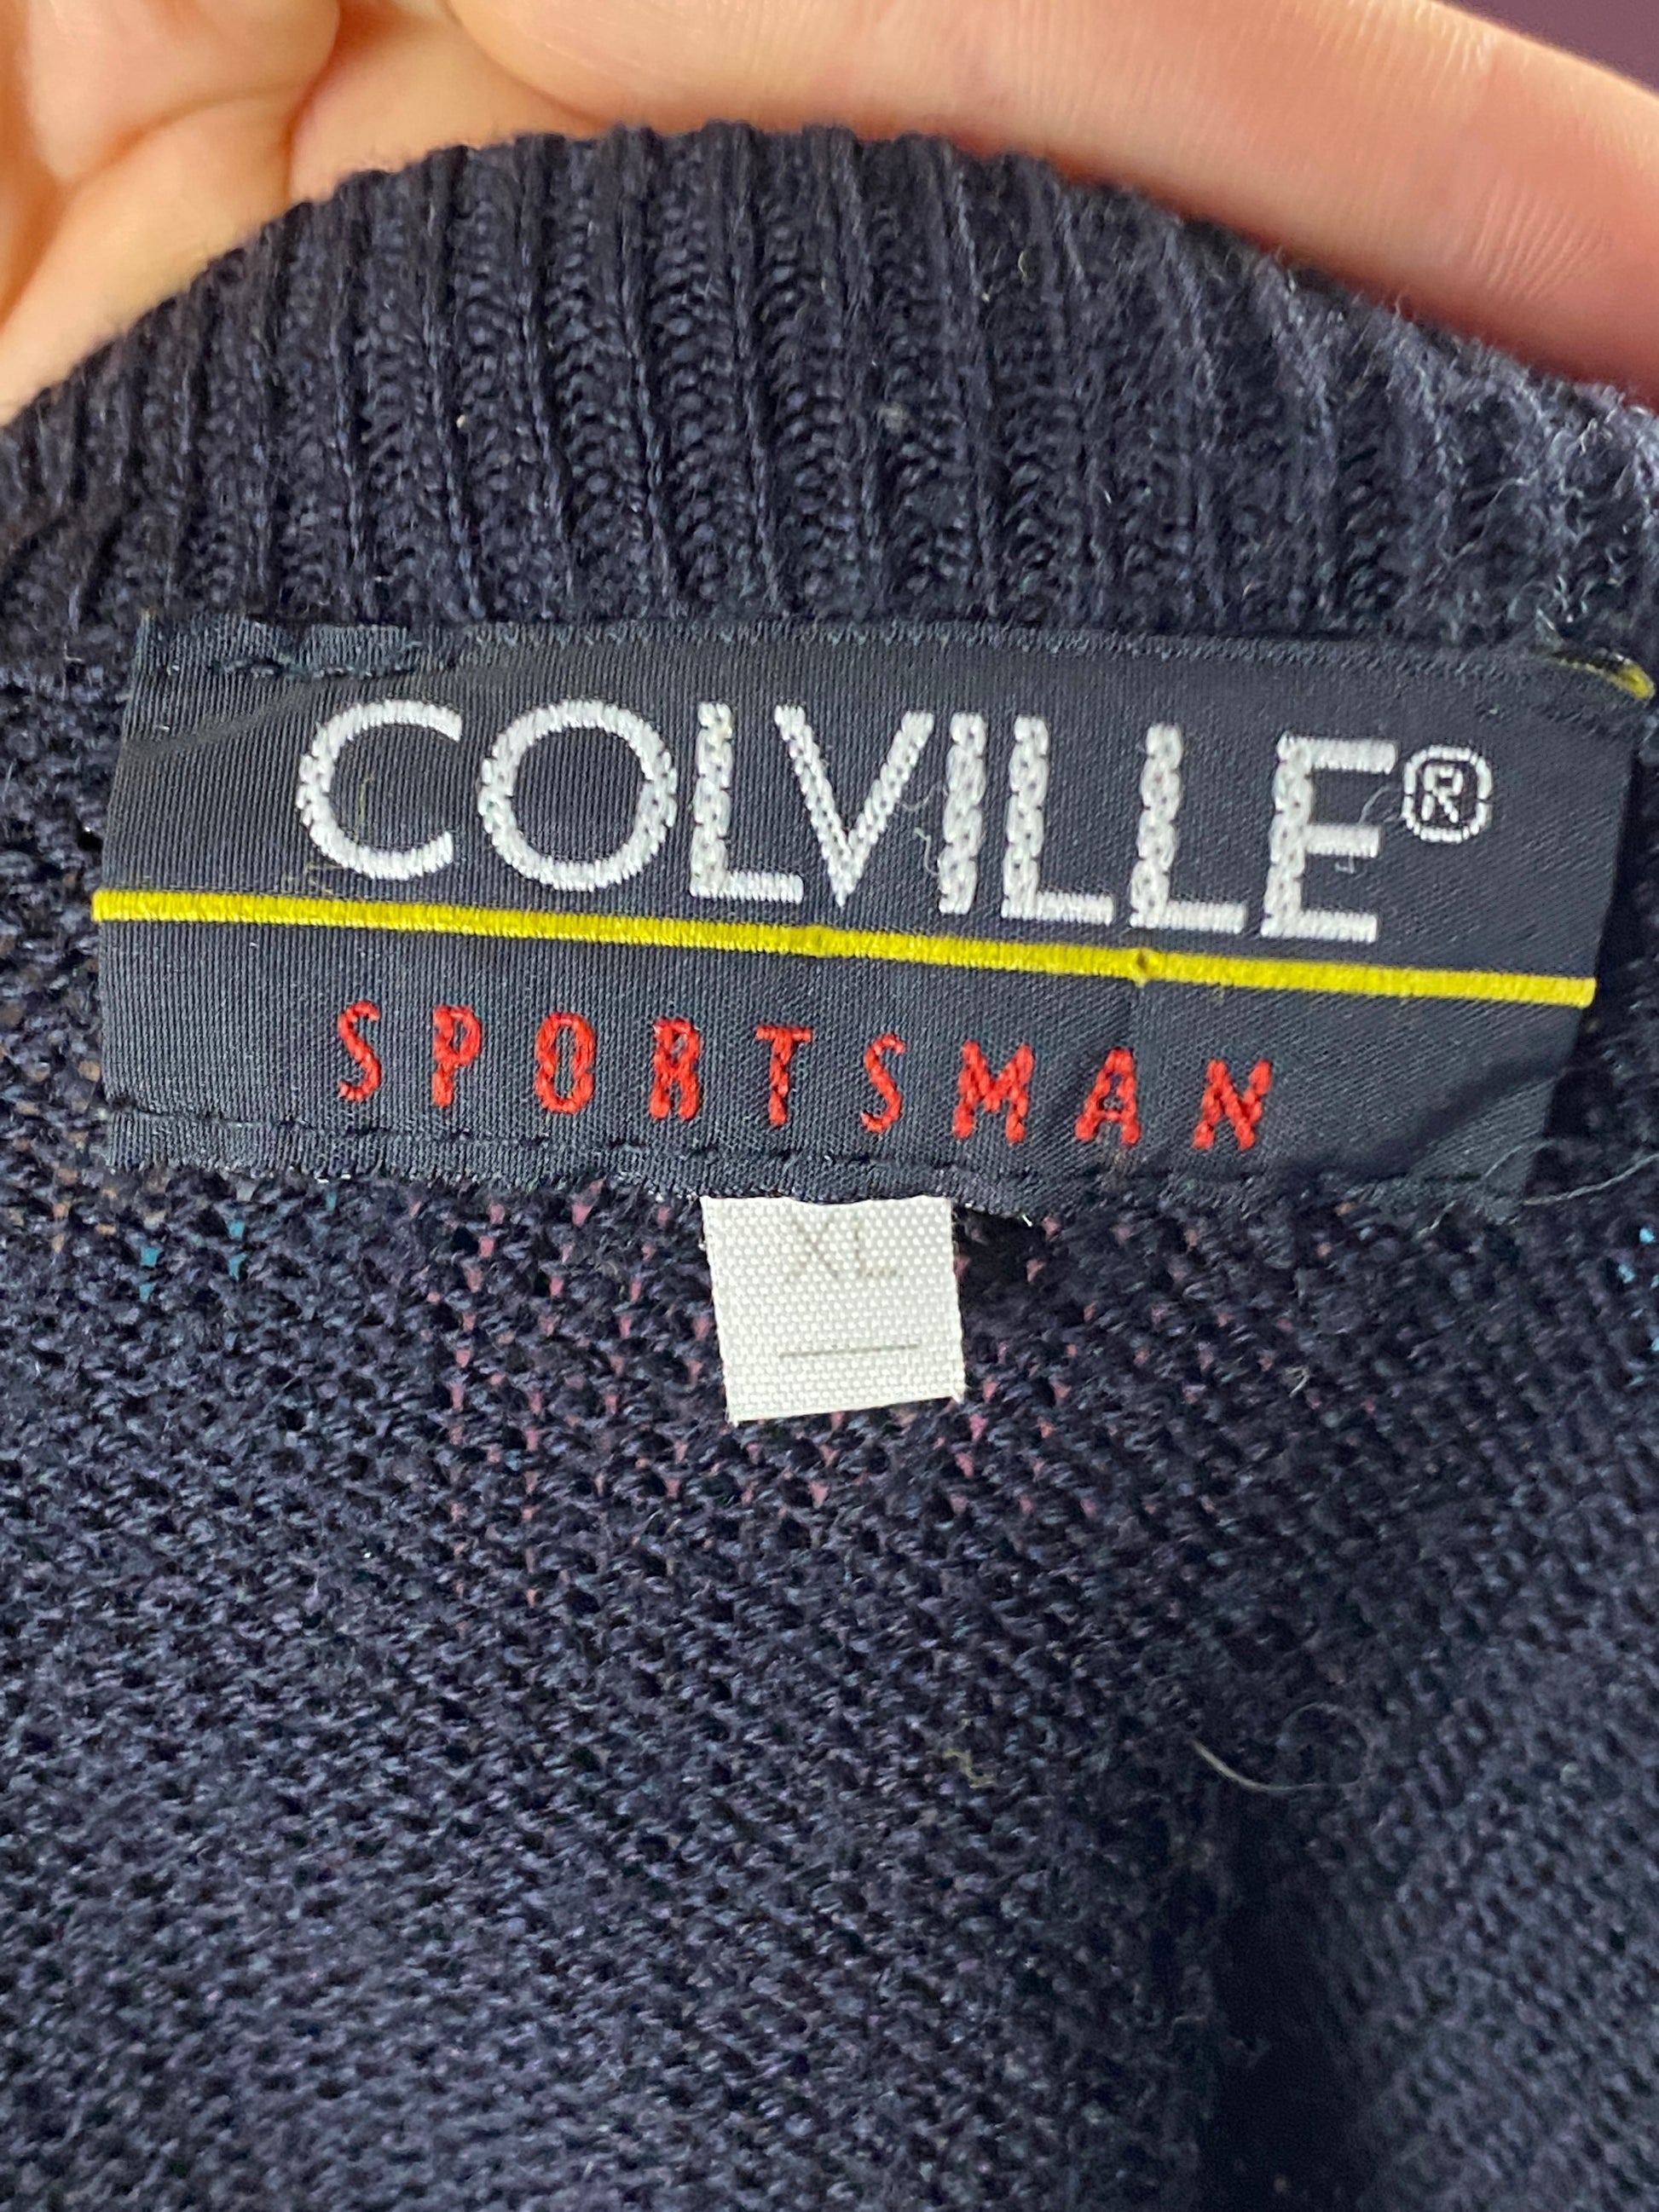 Colville Vintage Men's Sweater - XL Black Acrylic Blend